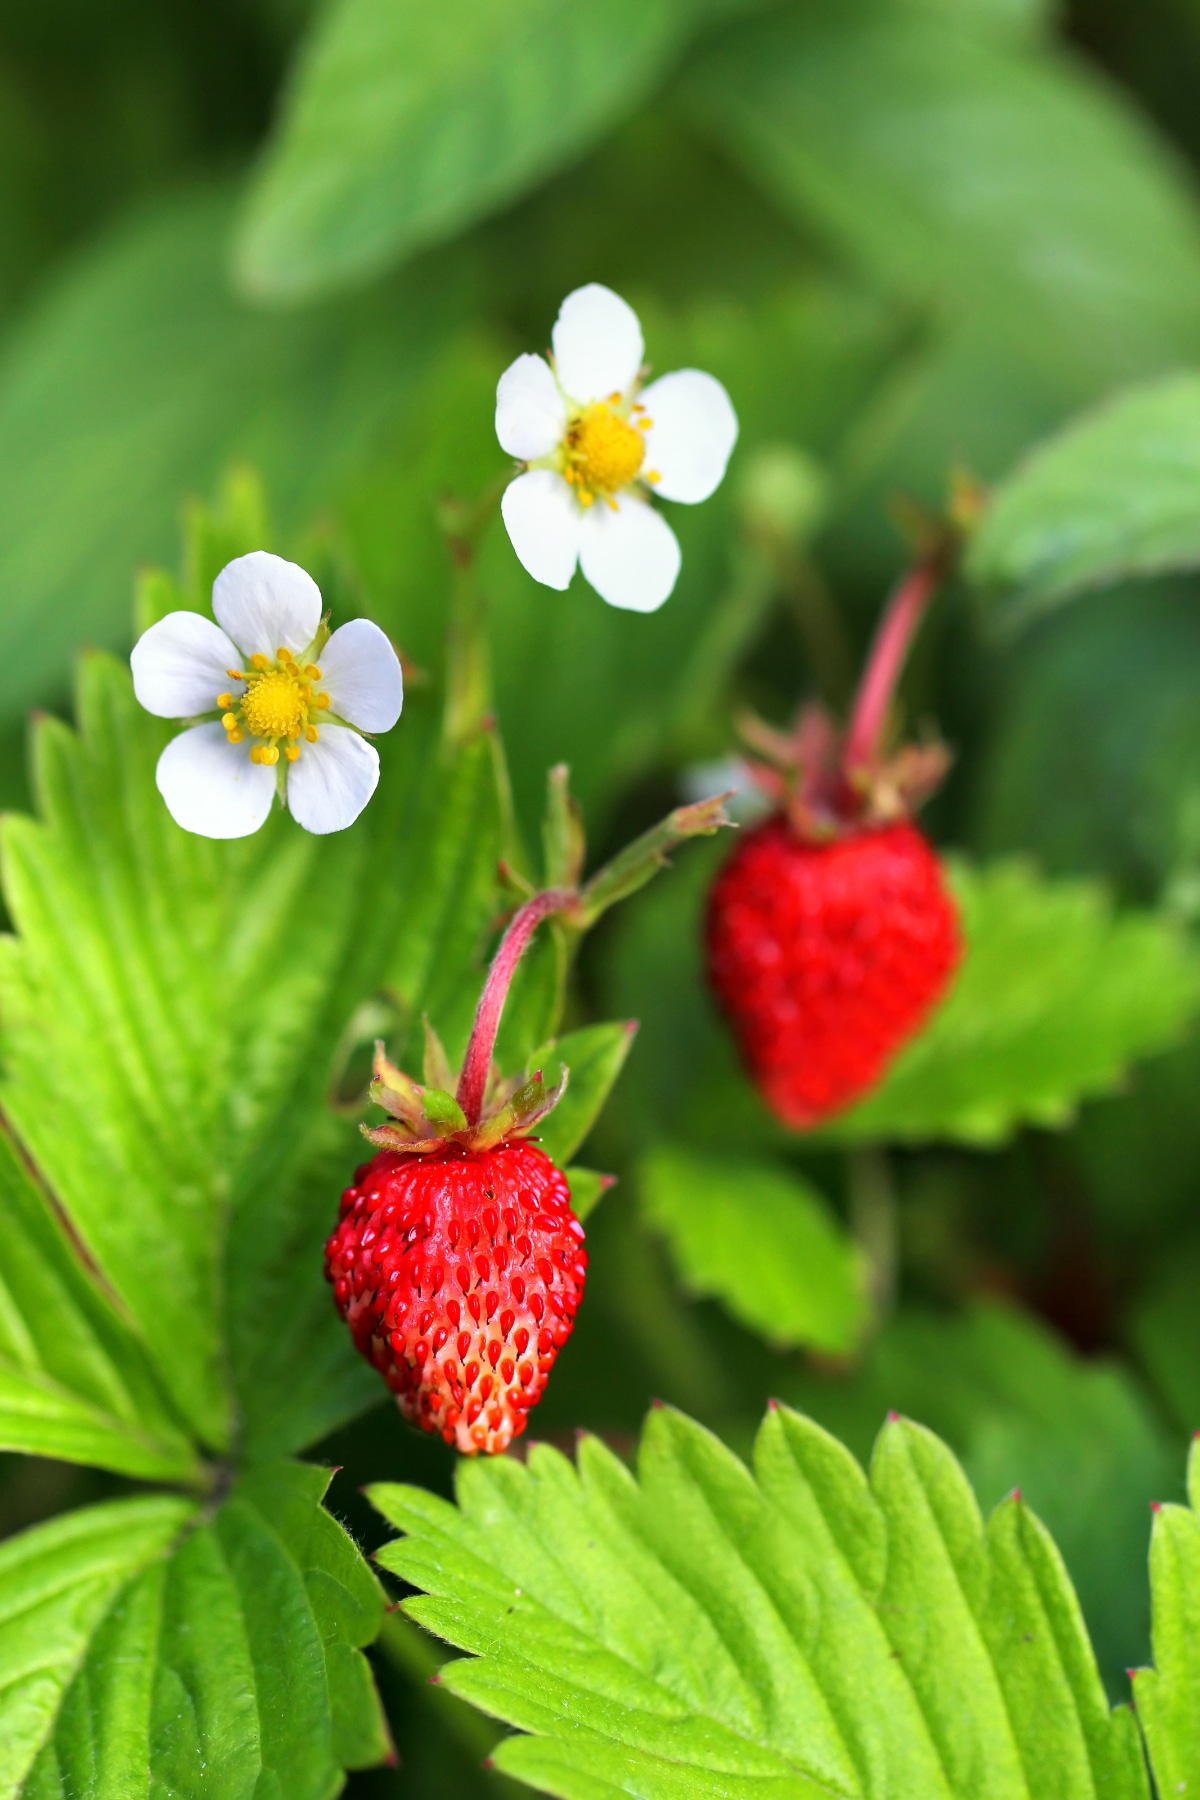 Alpine Strawberries